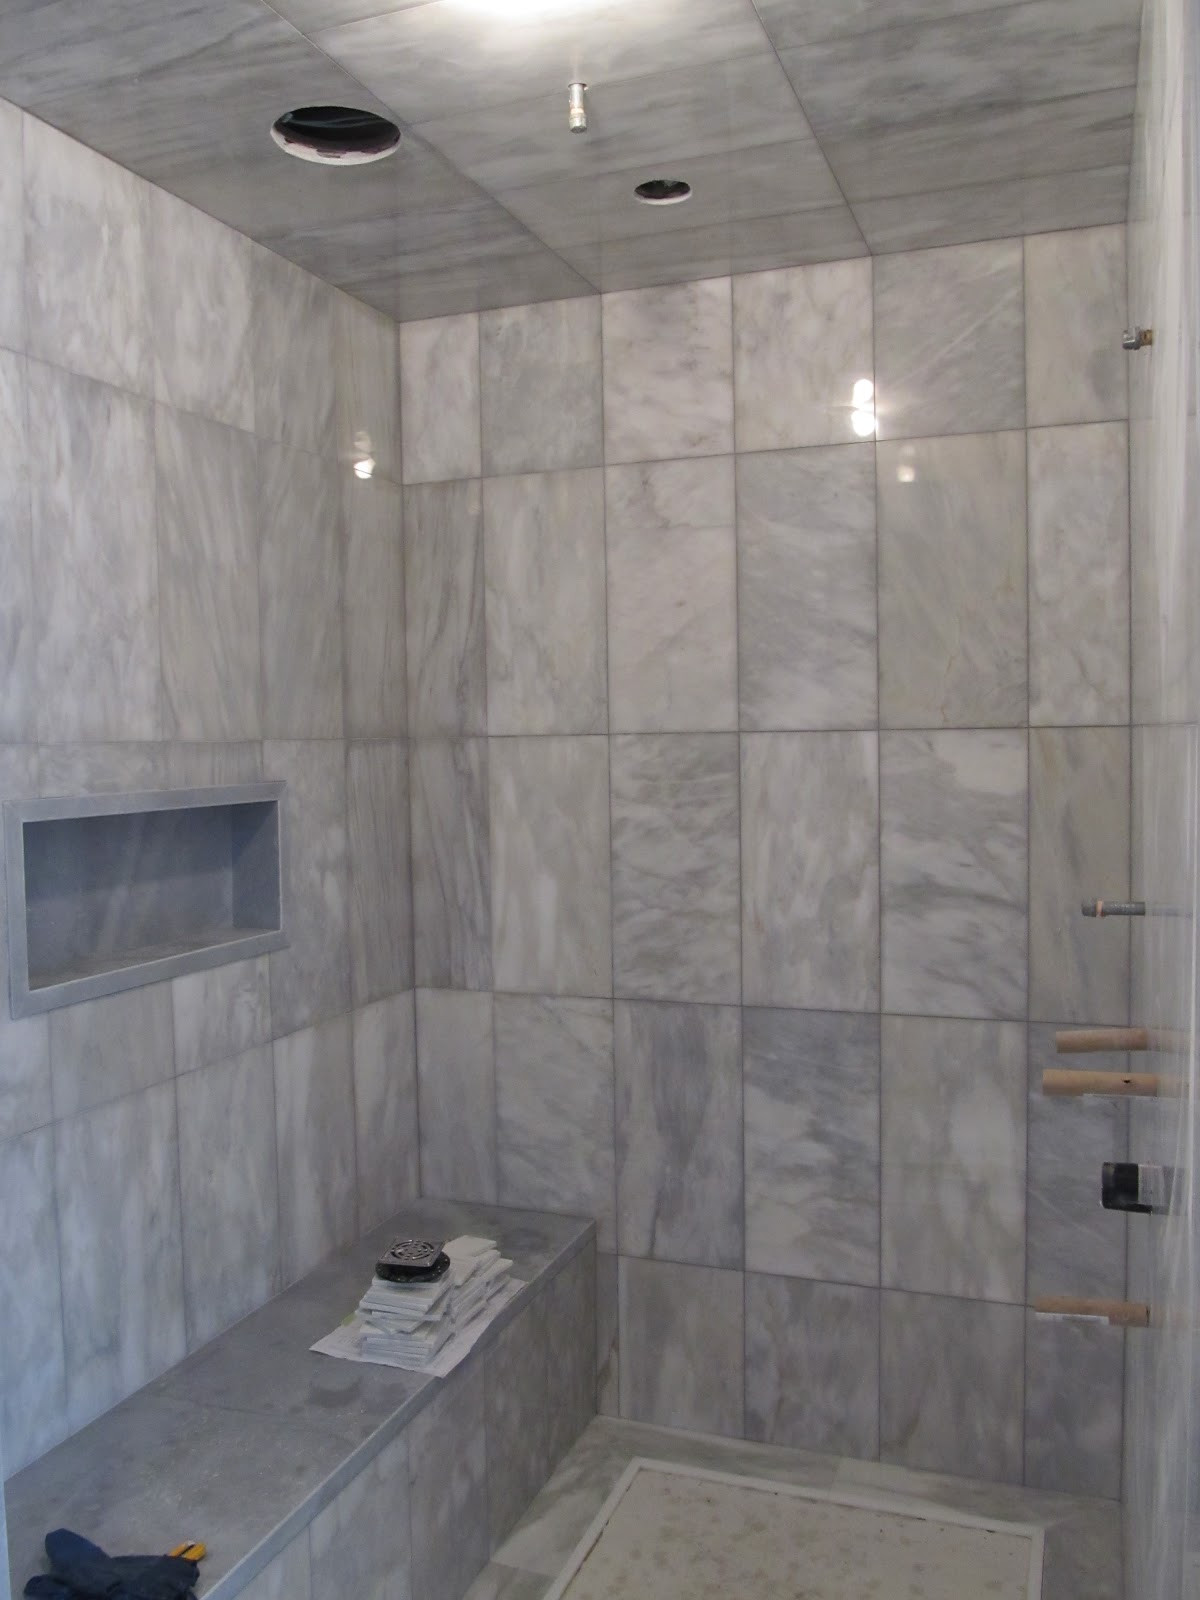 Bathroom Tile Shower
 BATHROOM RENOVATIONS TORONTO renovations remodeling